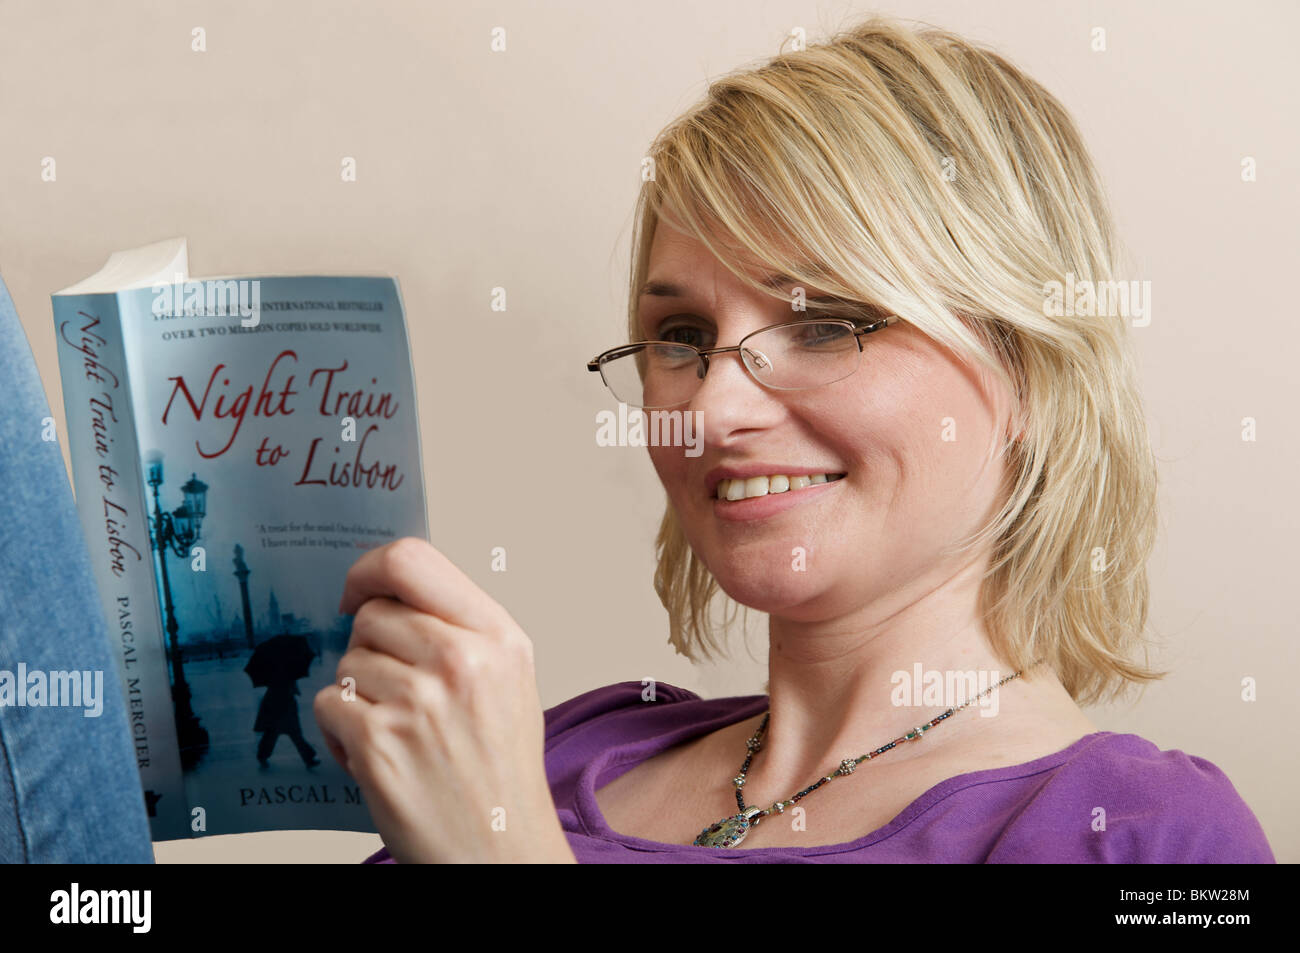 Woman reading the International bestseller Night train to Lisbon by Pascal  Mercier Stock Photo - Alamy